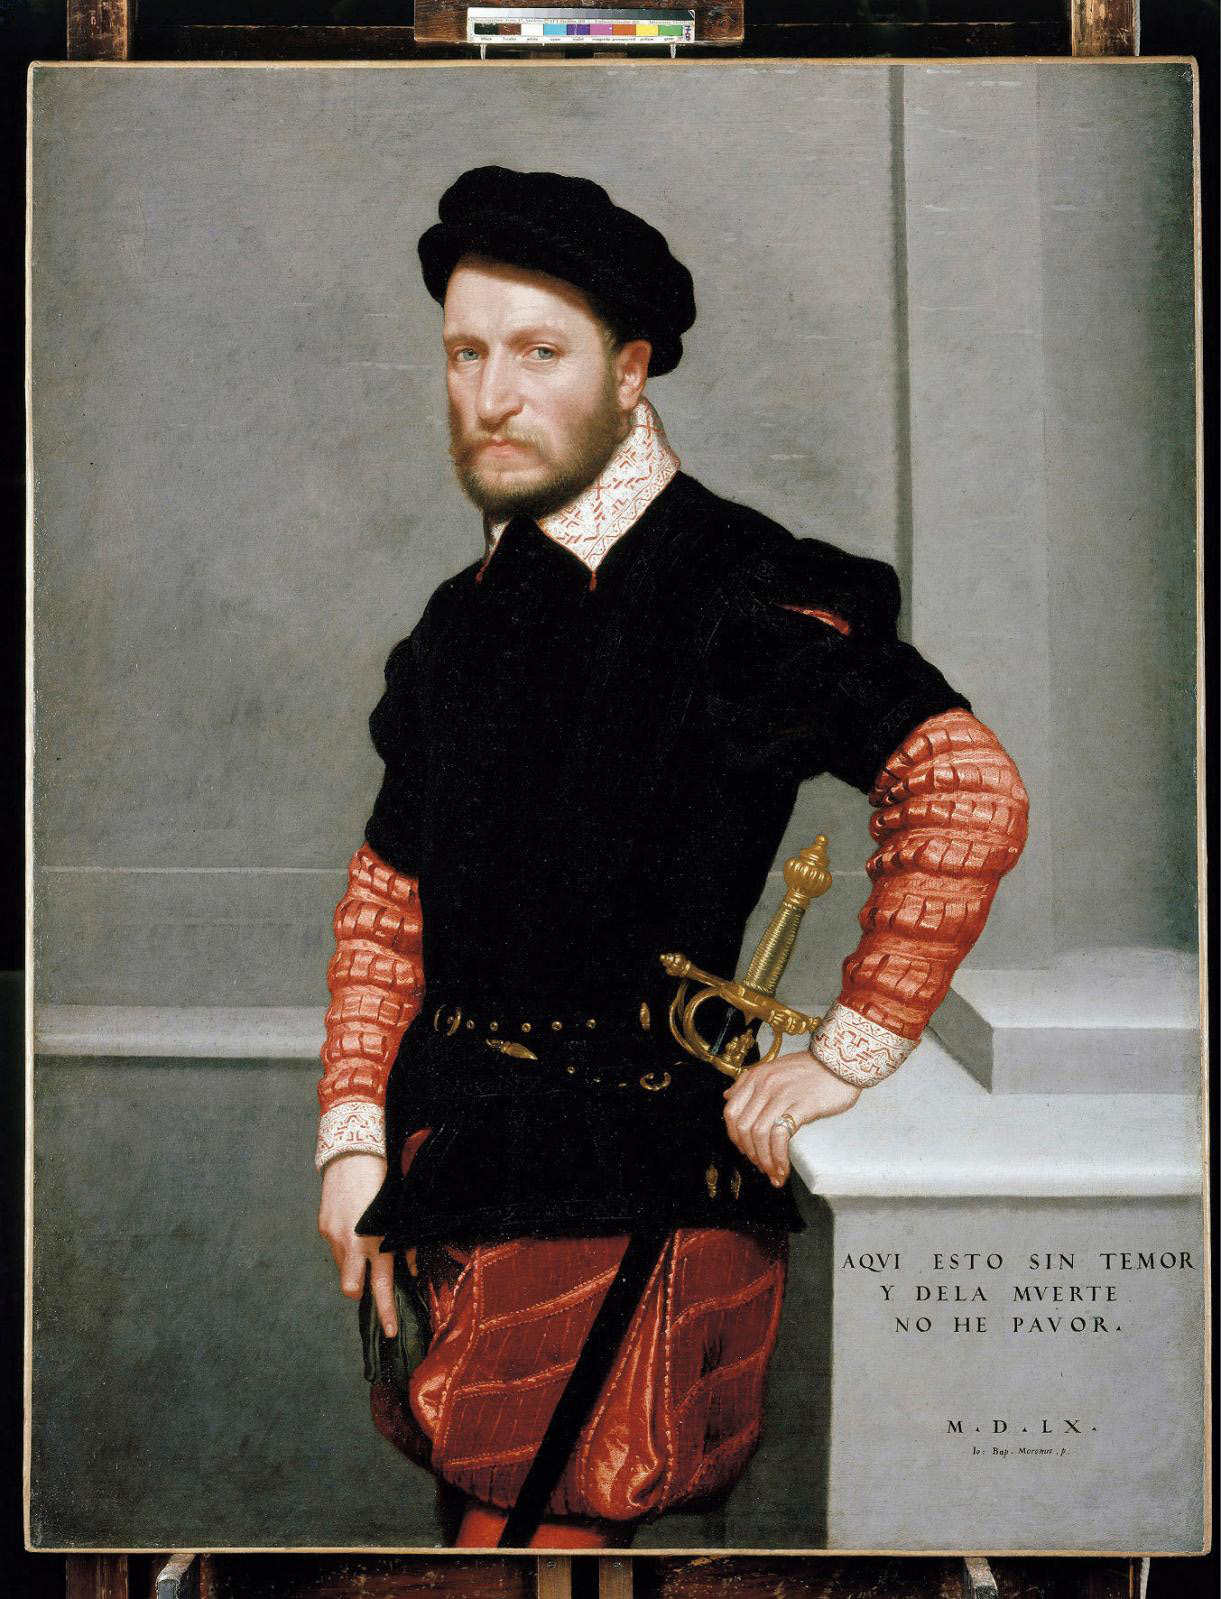 A Retrospective of 16th-Century Portraitist Moroni in Milan